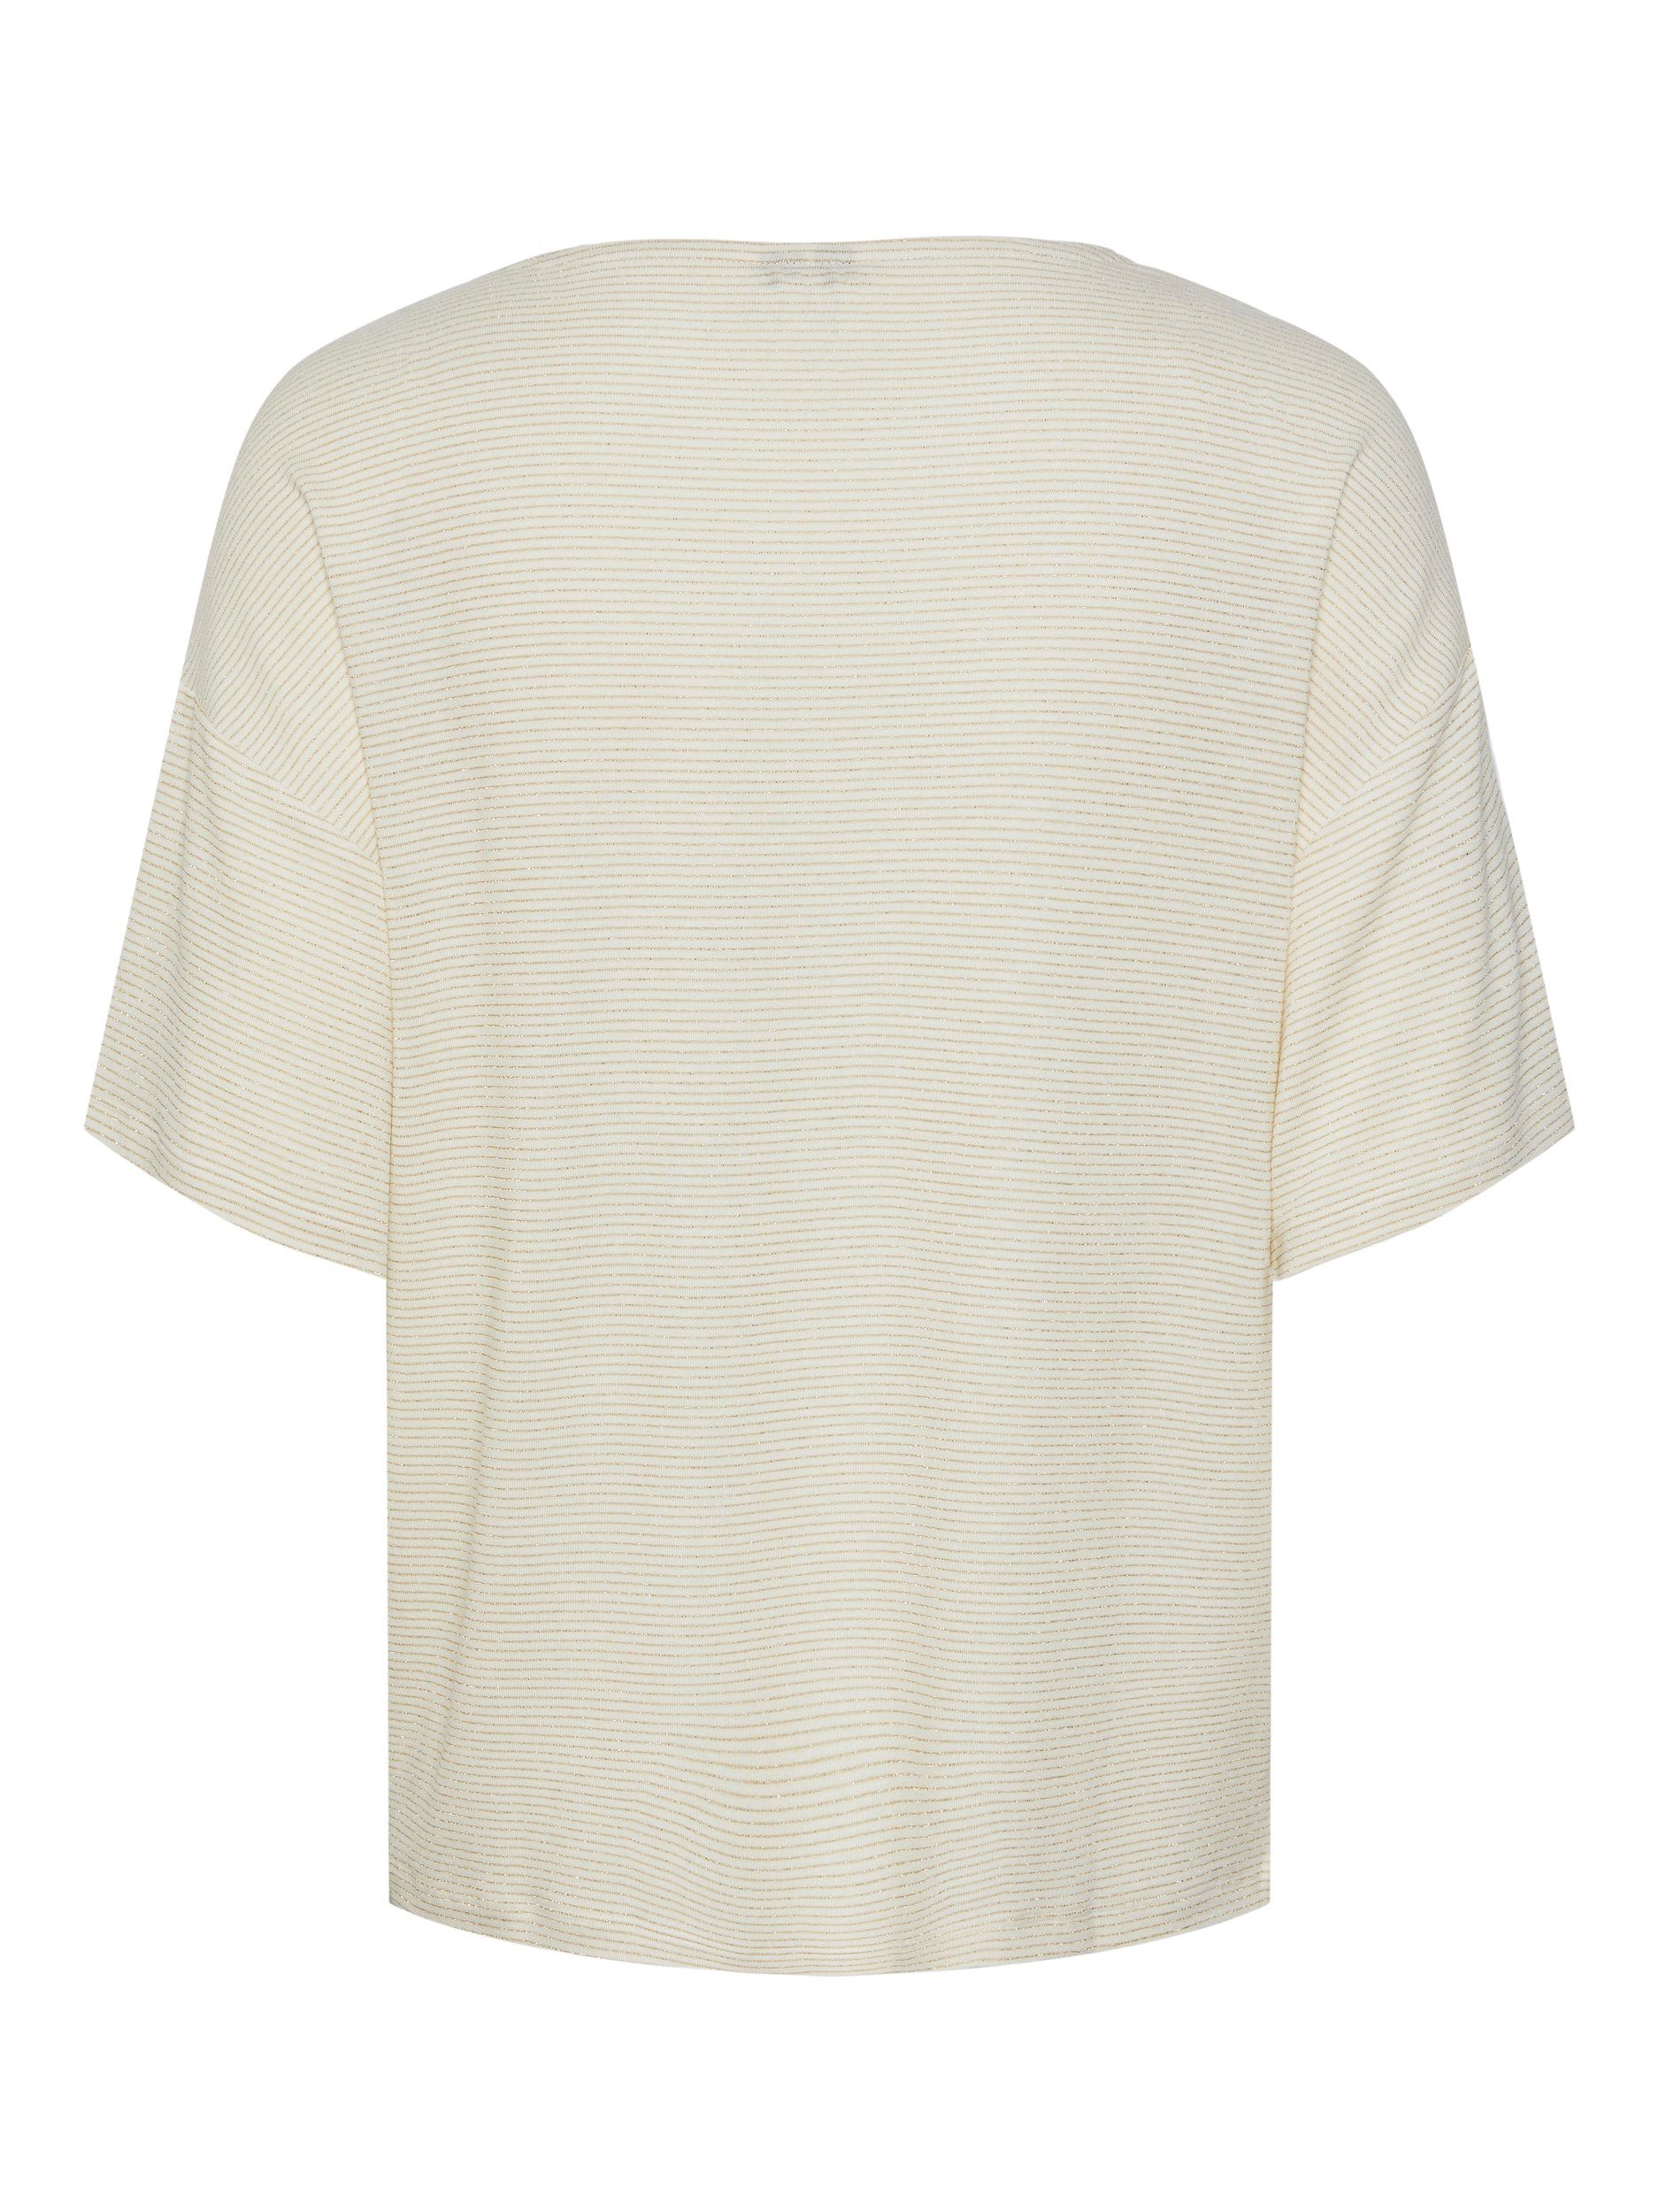 STRIPES LUREX Bright OVERSIZED V-Shirt LUREX pieces NOOS Detail:GOLD PCBILLO White TEE